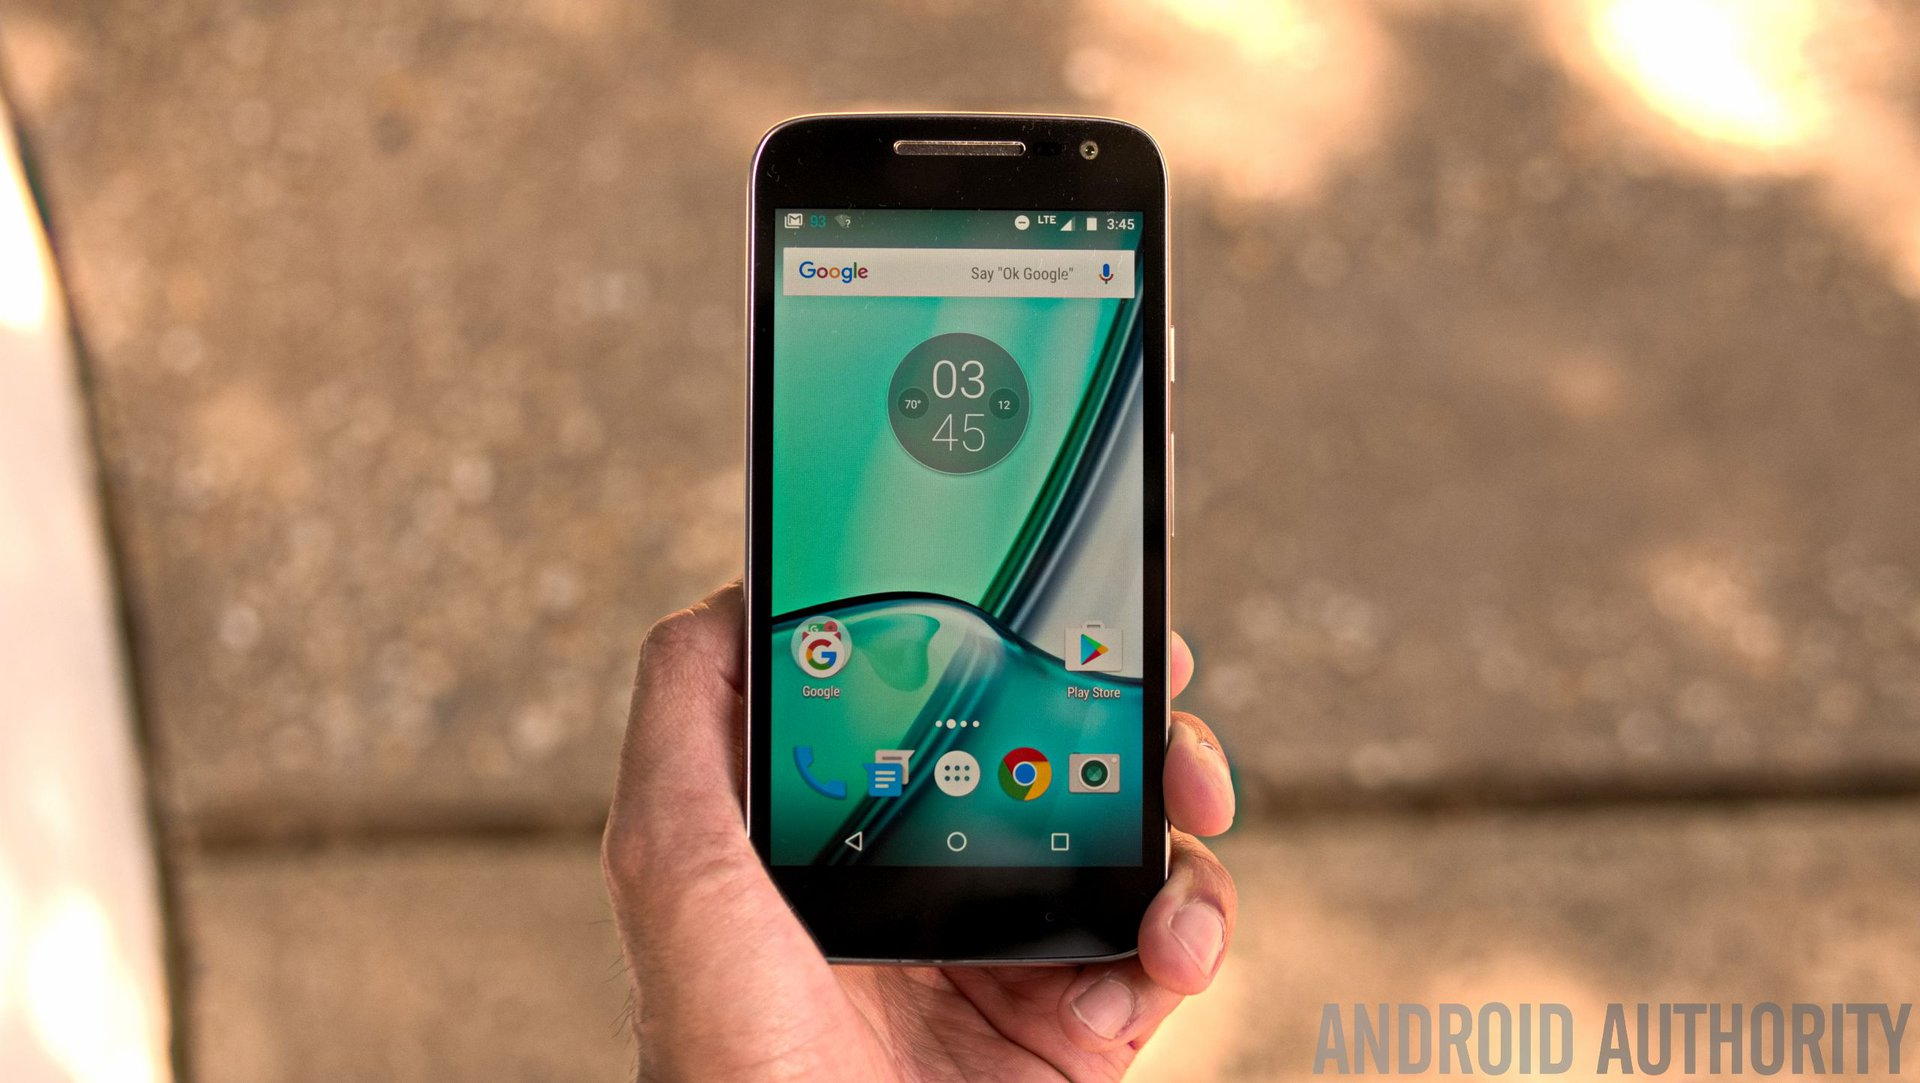 Motorola Moto G4 Play 16 GB Cell Phones & Smartphones